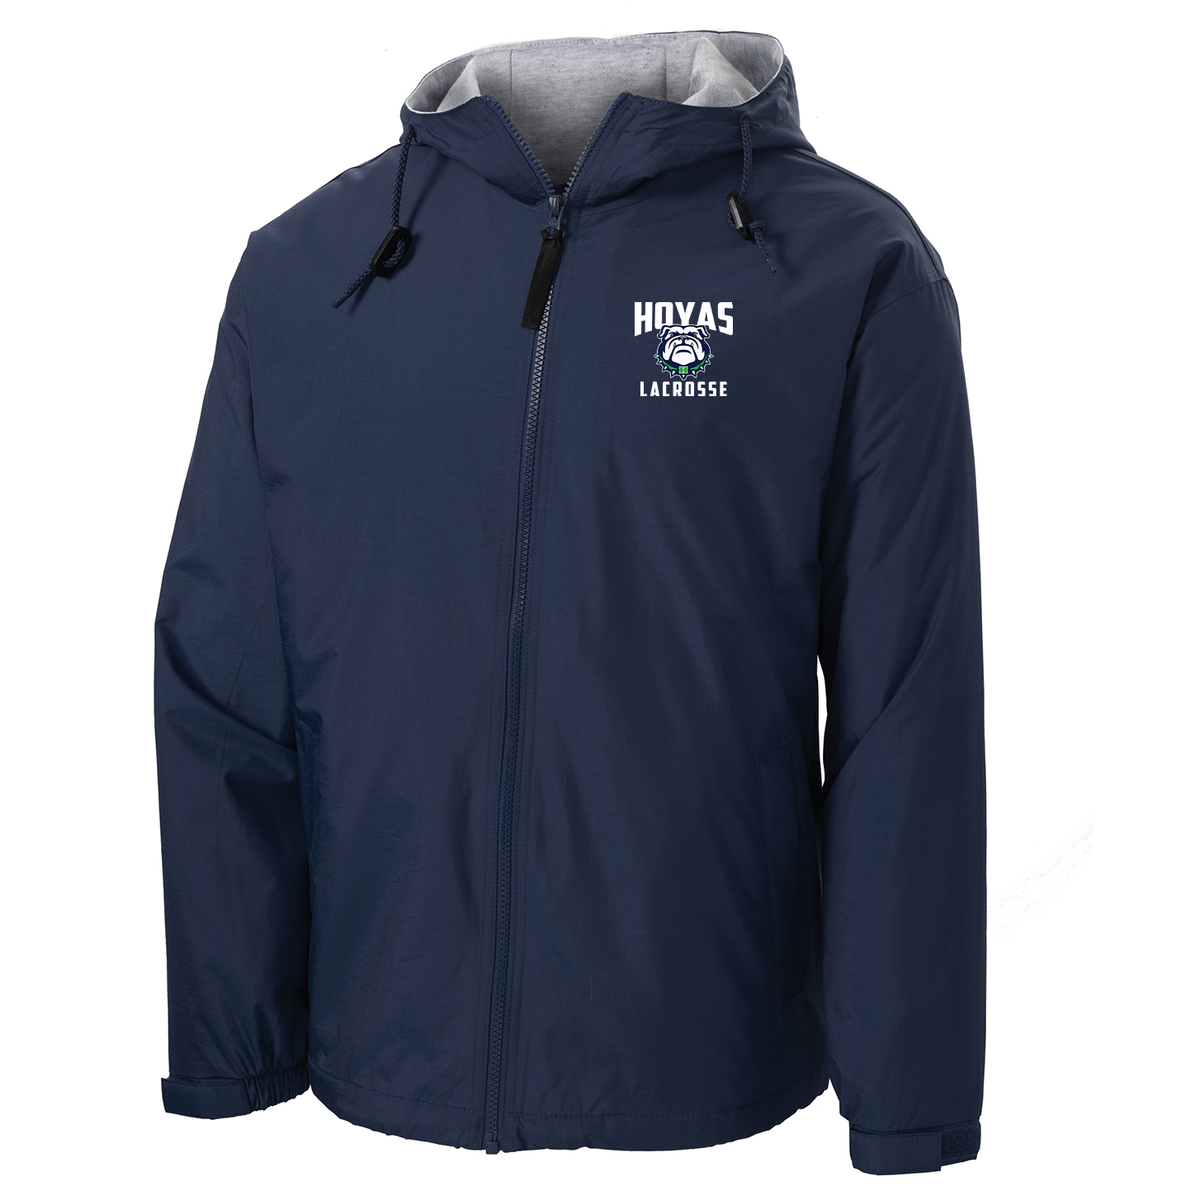 Hoya Lacrosse Hooded Jacket